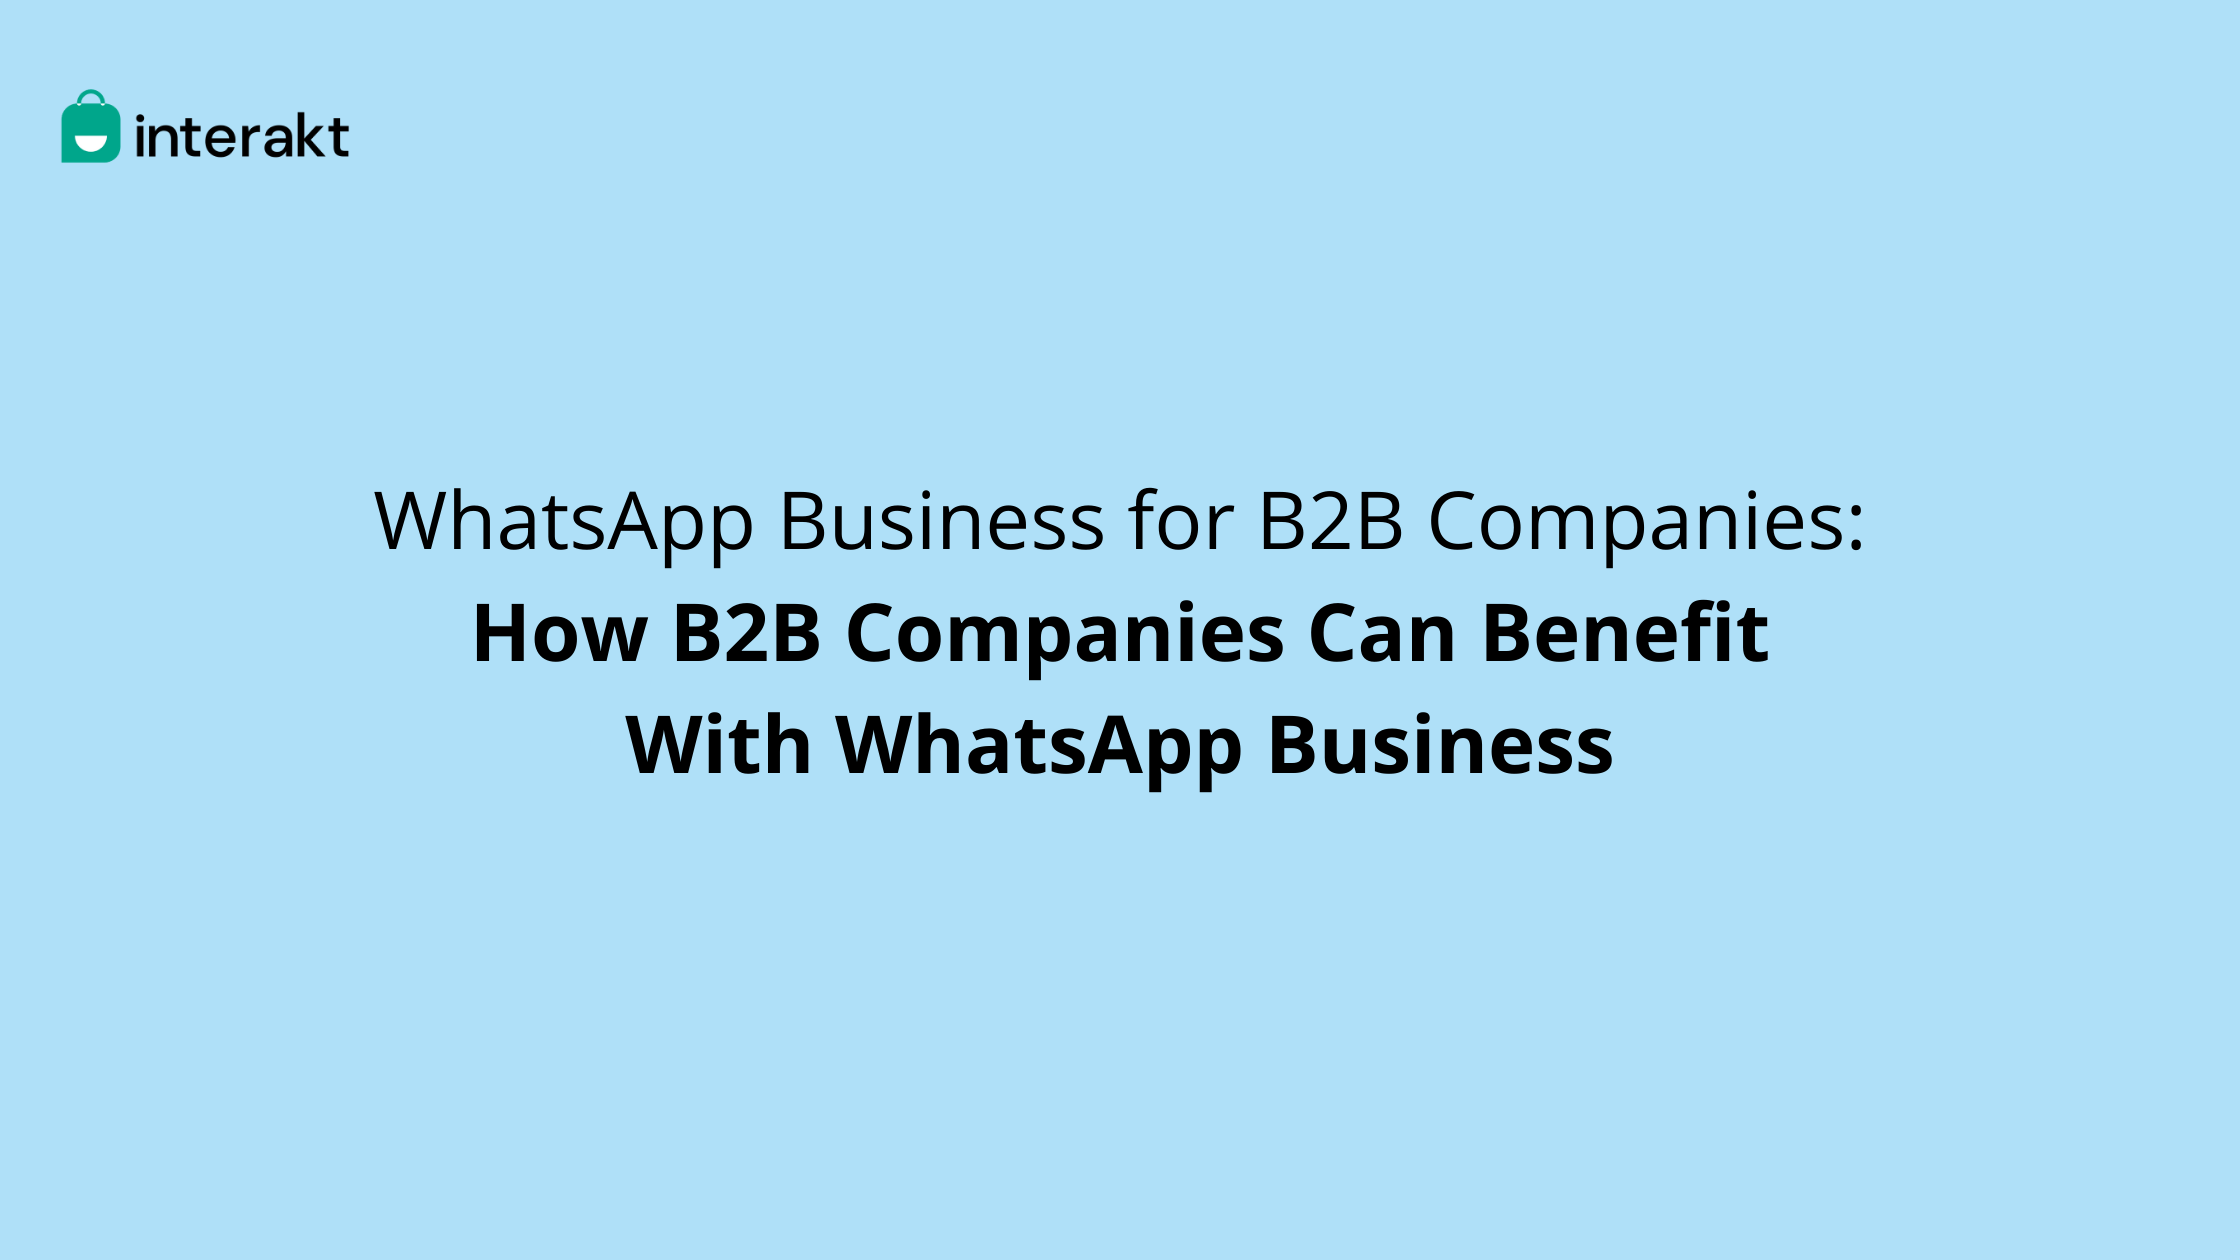 WhatsApp Business for B2B companies